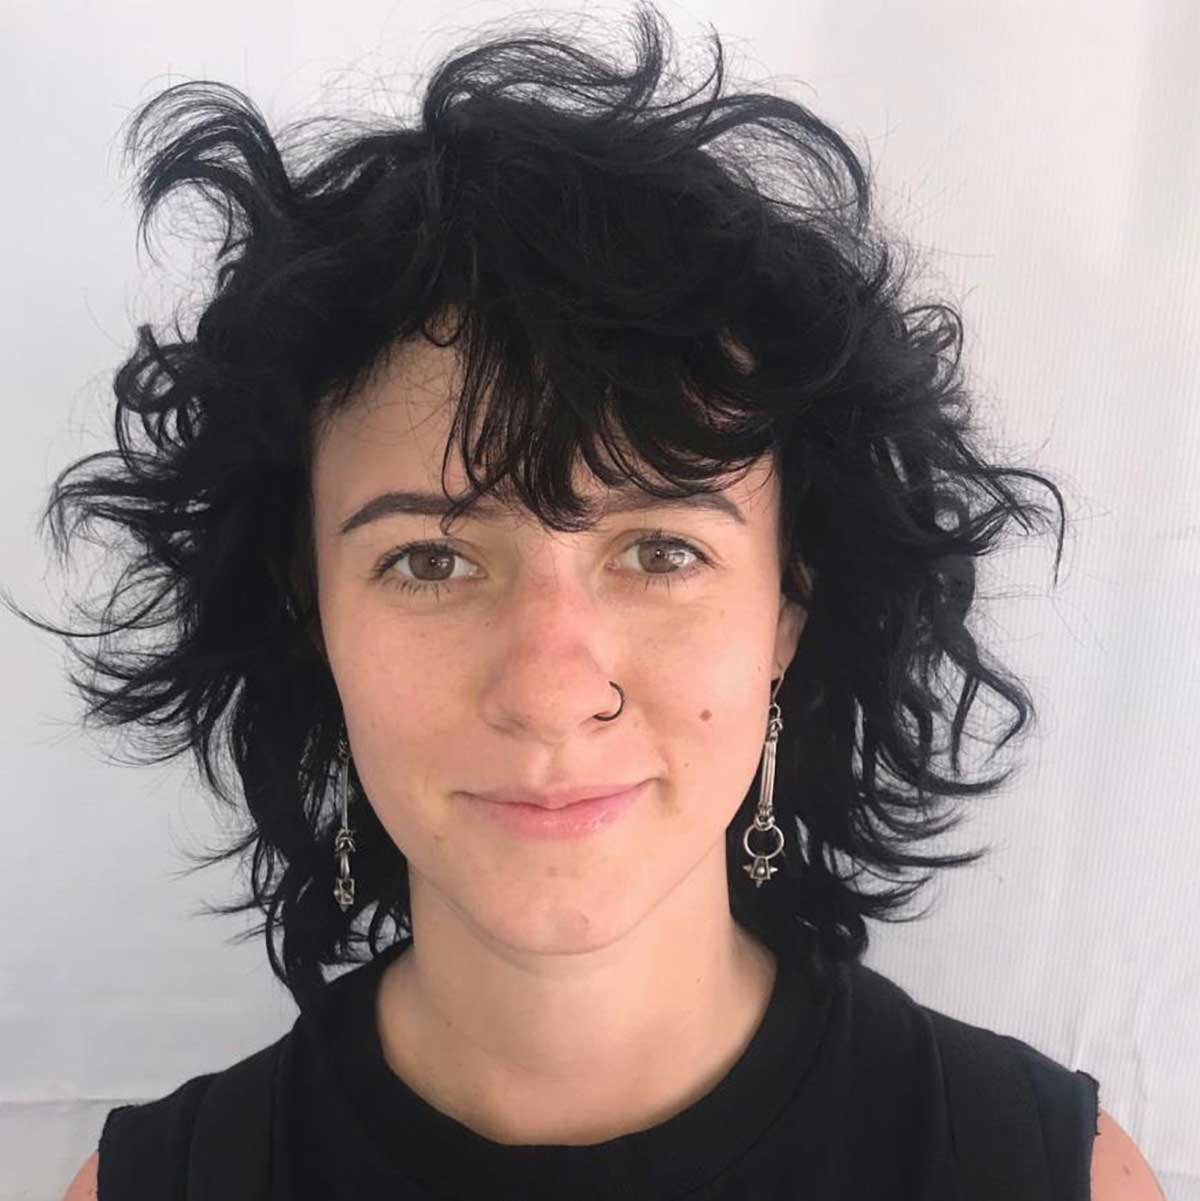 Profile image of Breana Geering